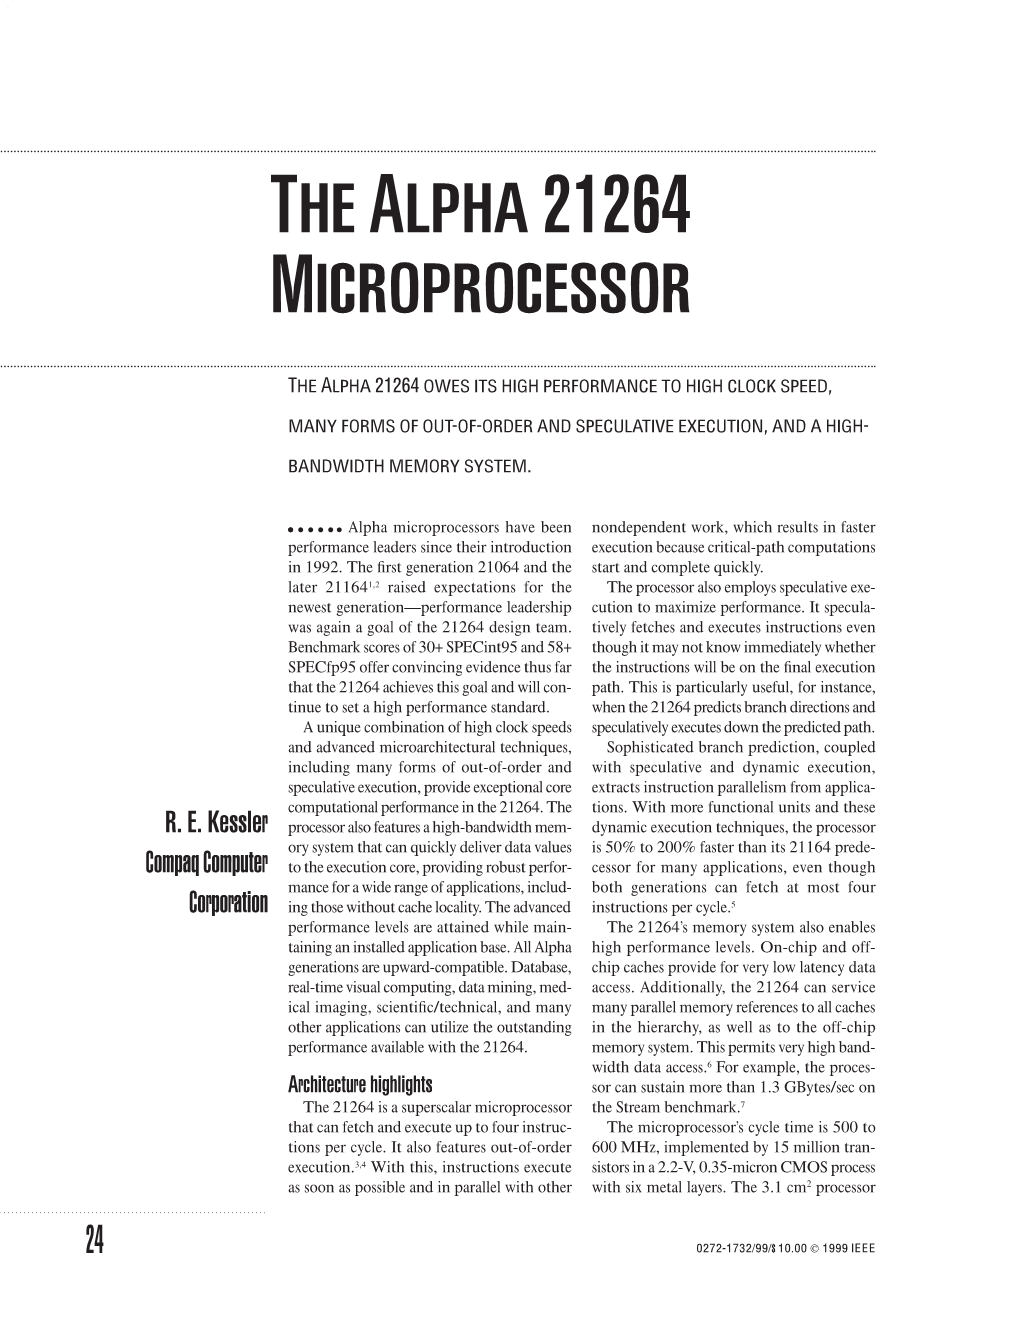 The Alpha 21264 Microprocessor